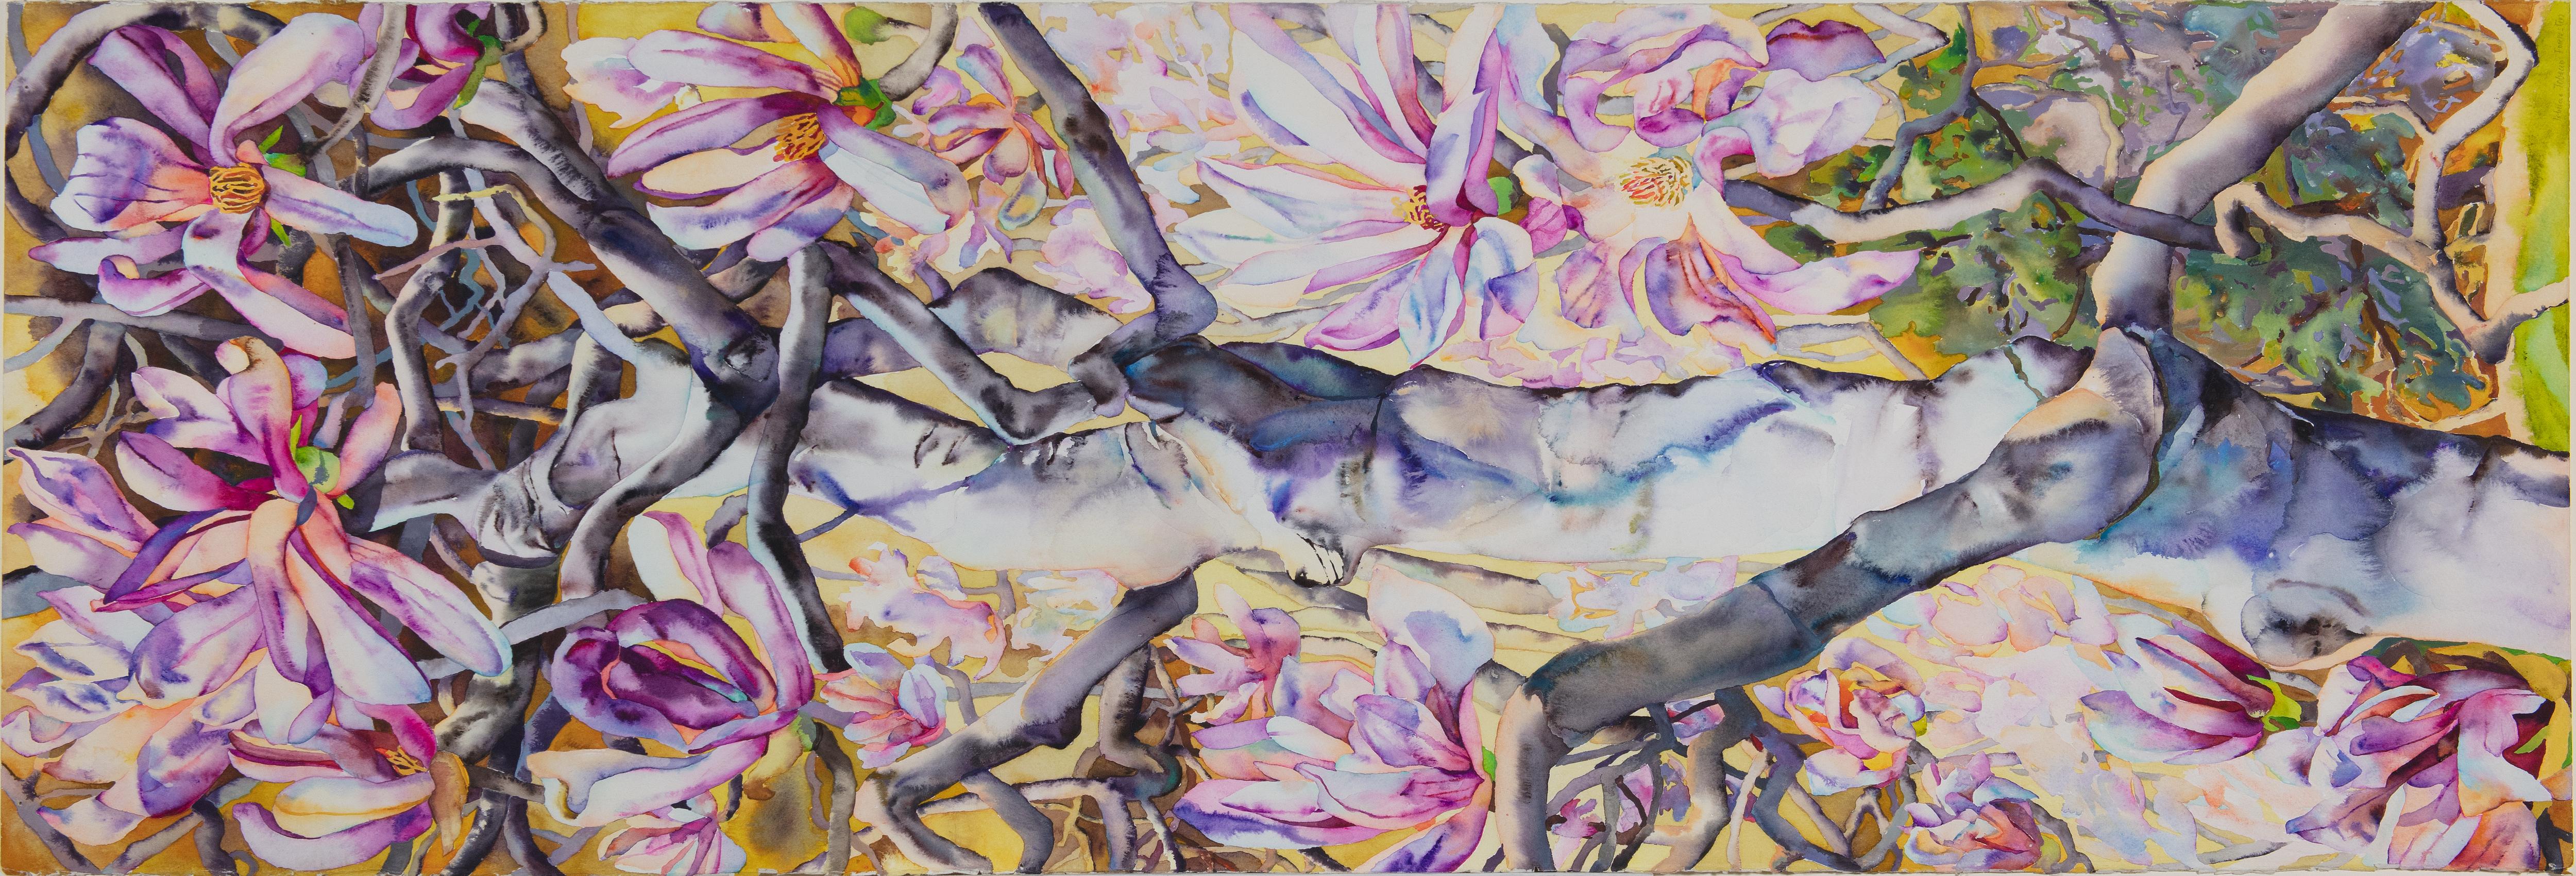 Aquarelle originale « Magnolia Spine » signée par Patricia Tobacco Forrester - Painting de Patricia Tobacco-Forrester